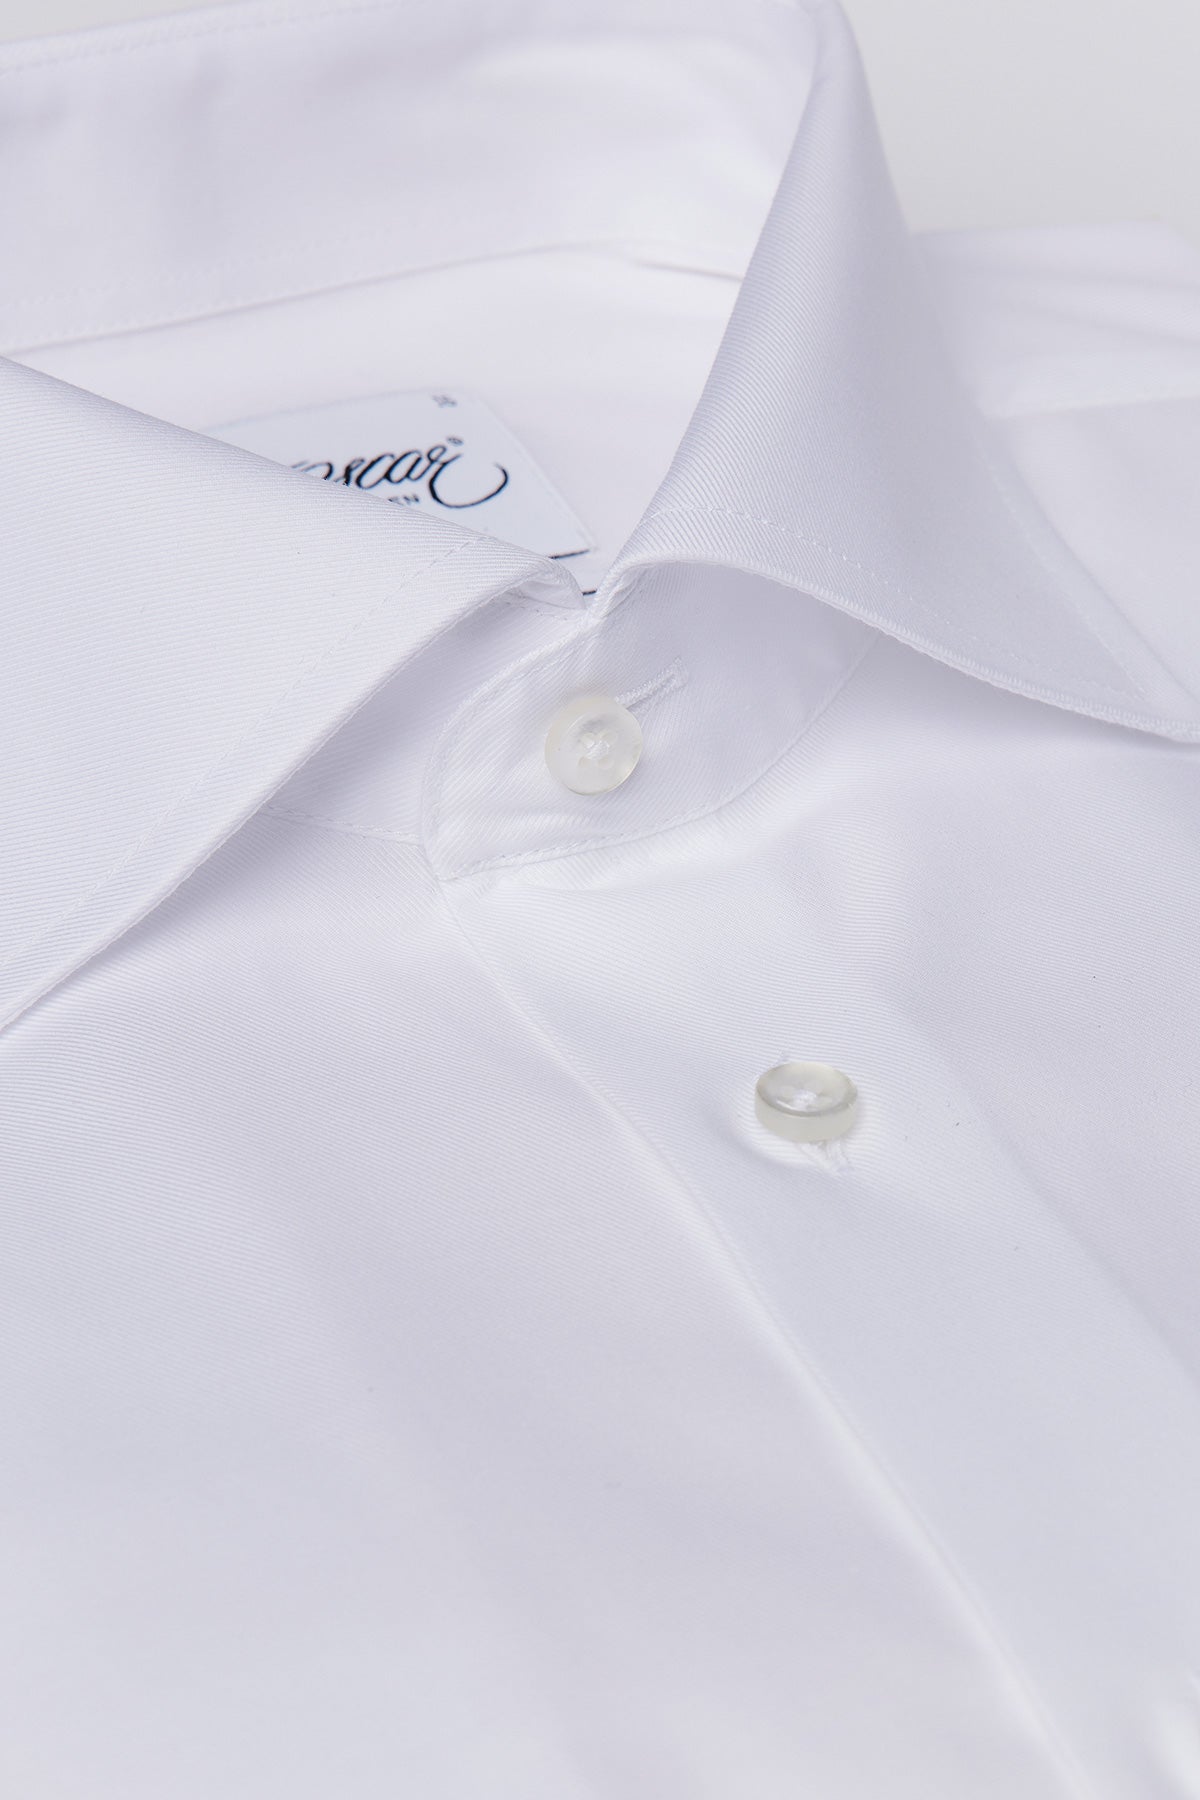 White wrinkle free regular fit shirt